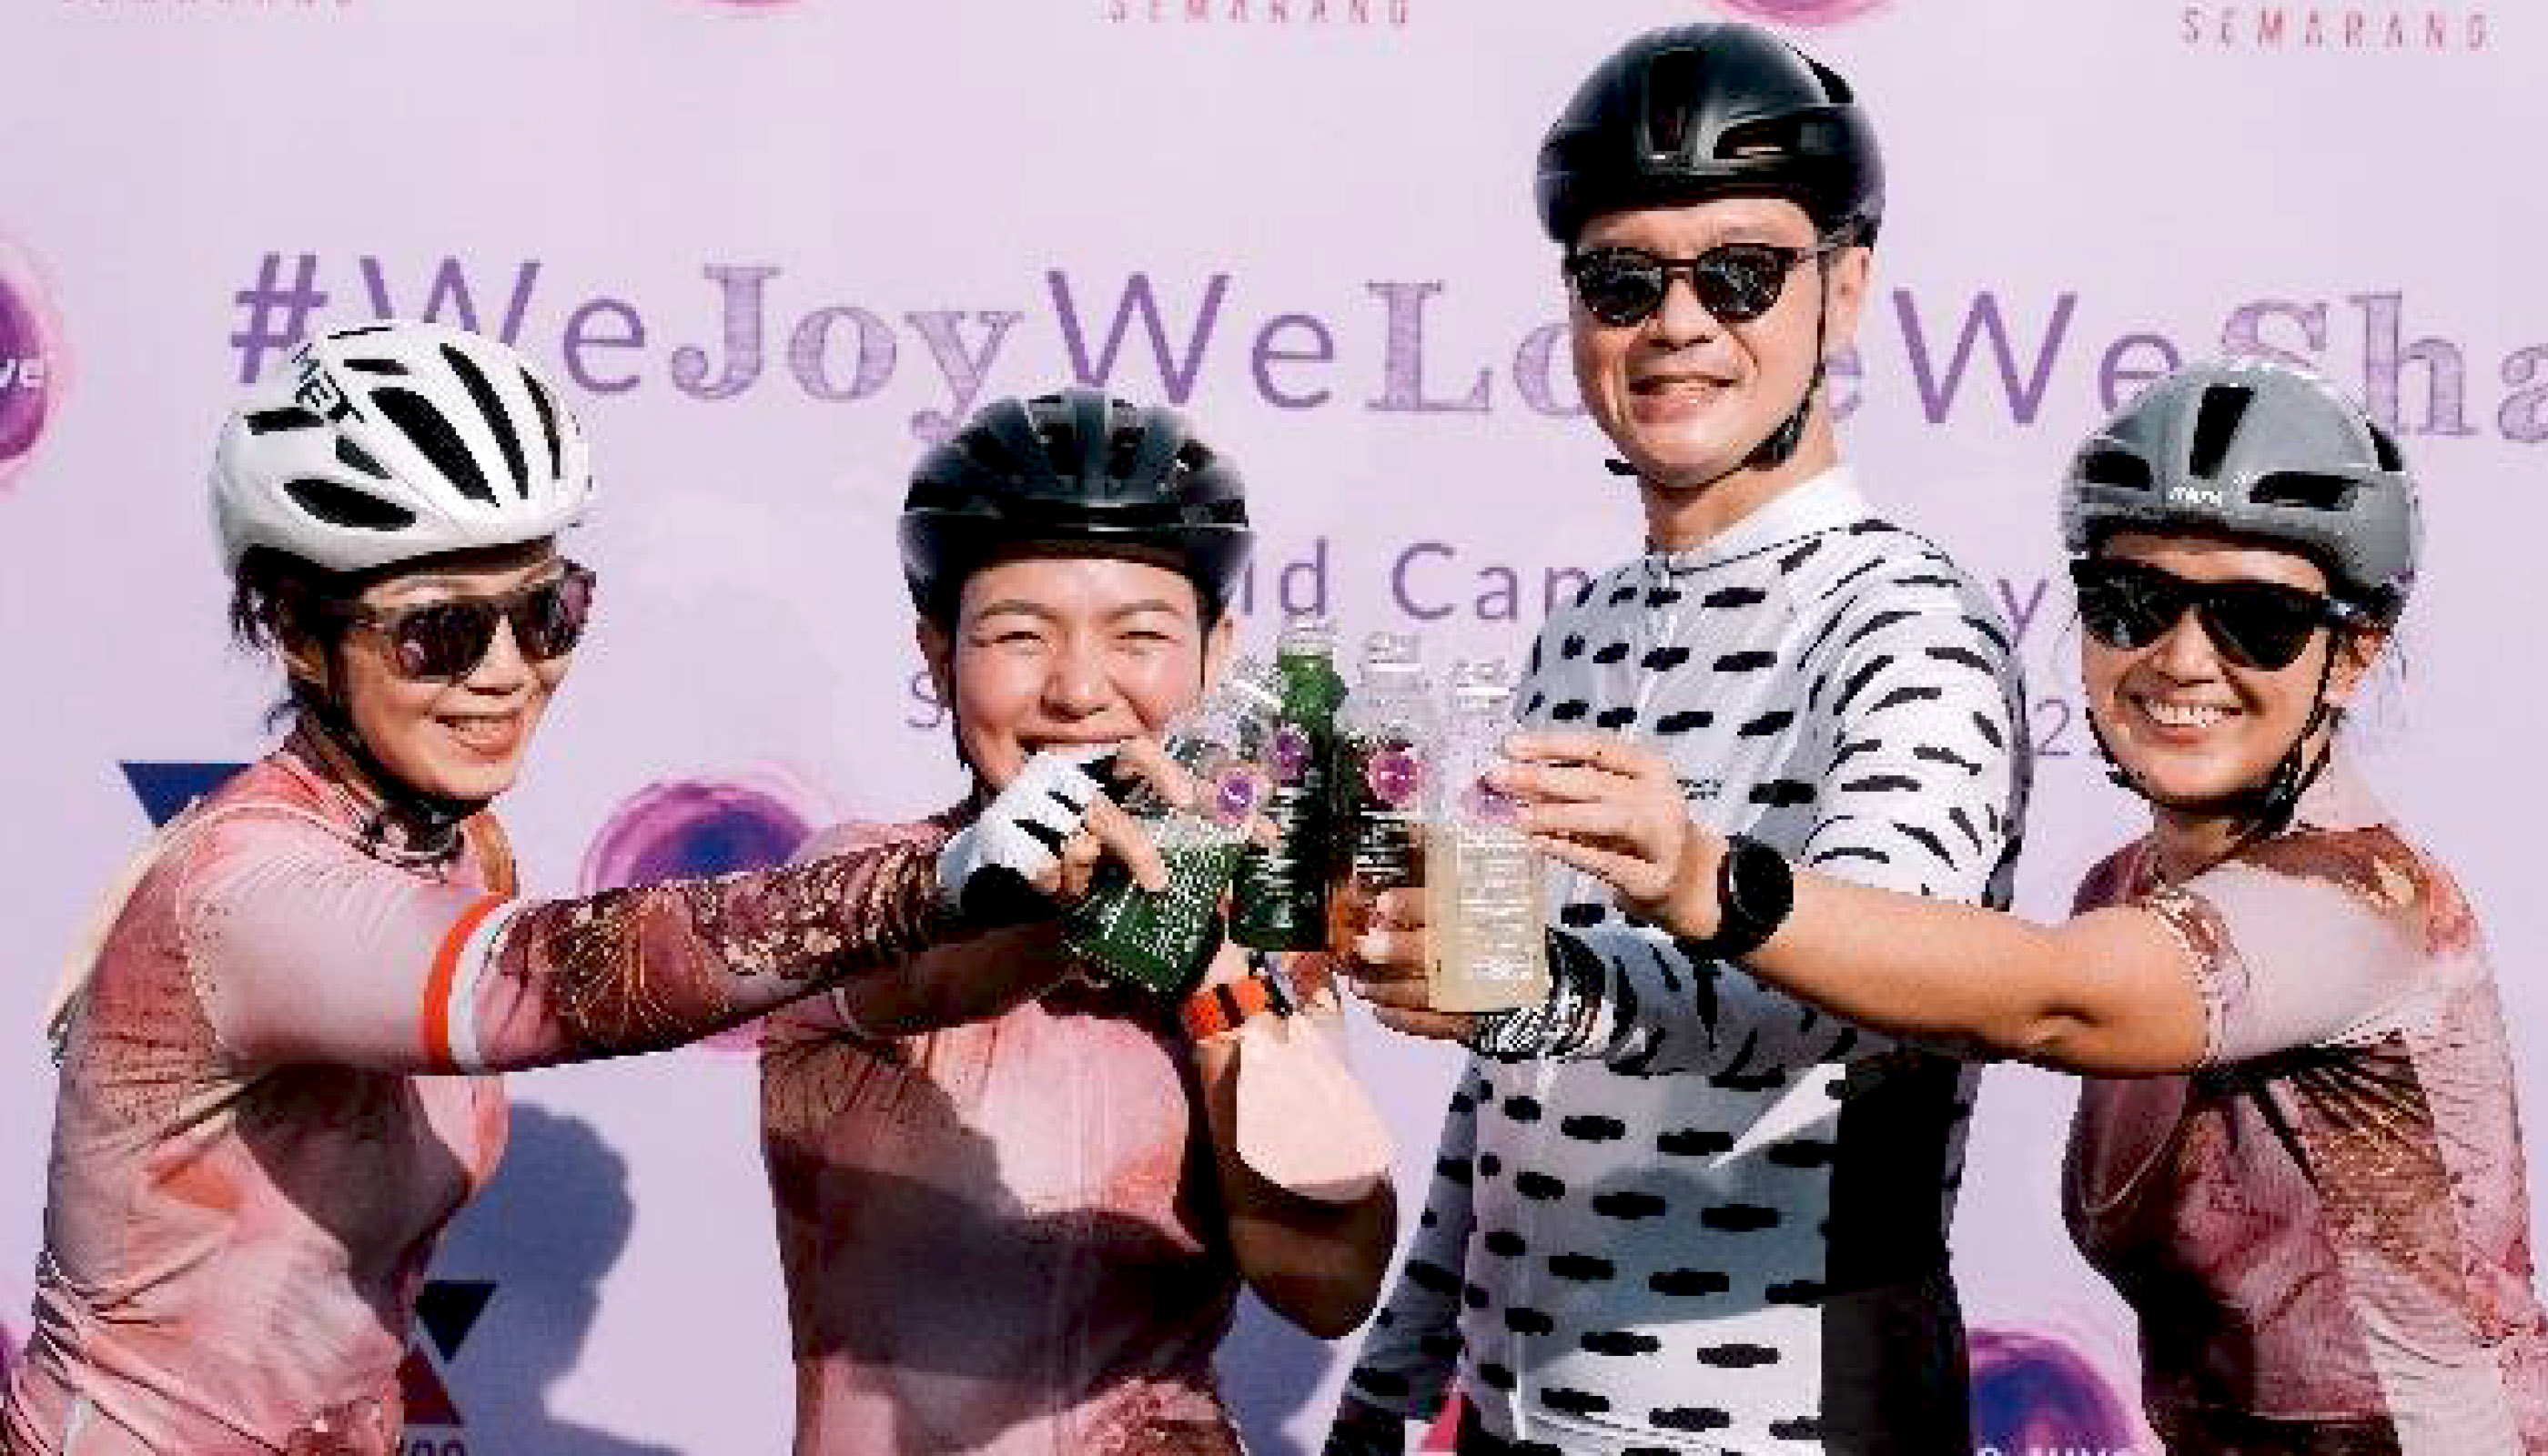 Rayakan Hari Kanker Dunia : Re.juve X WCC Kampanyekan #WeJoyWeLoveWeShare